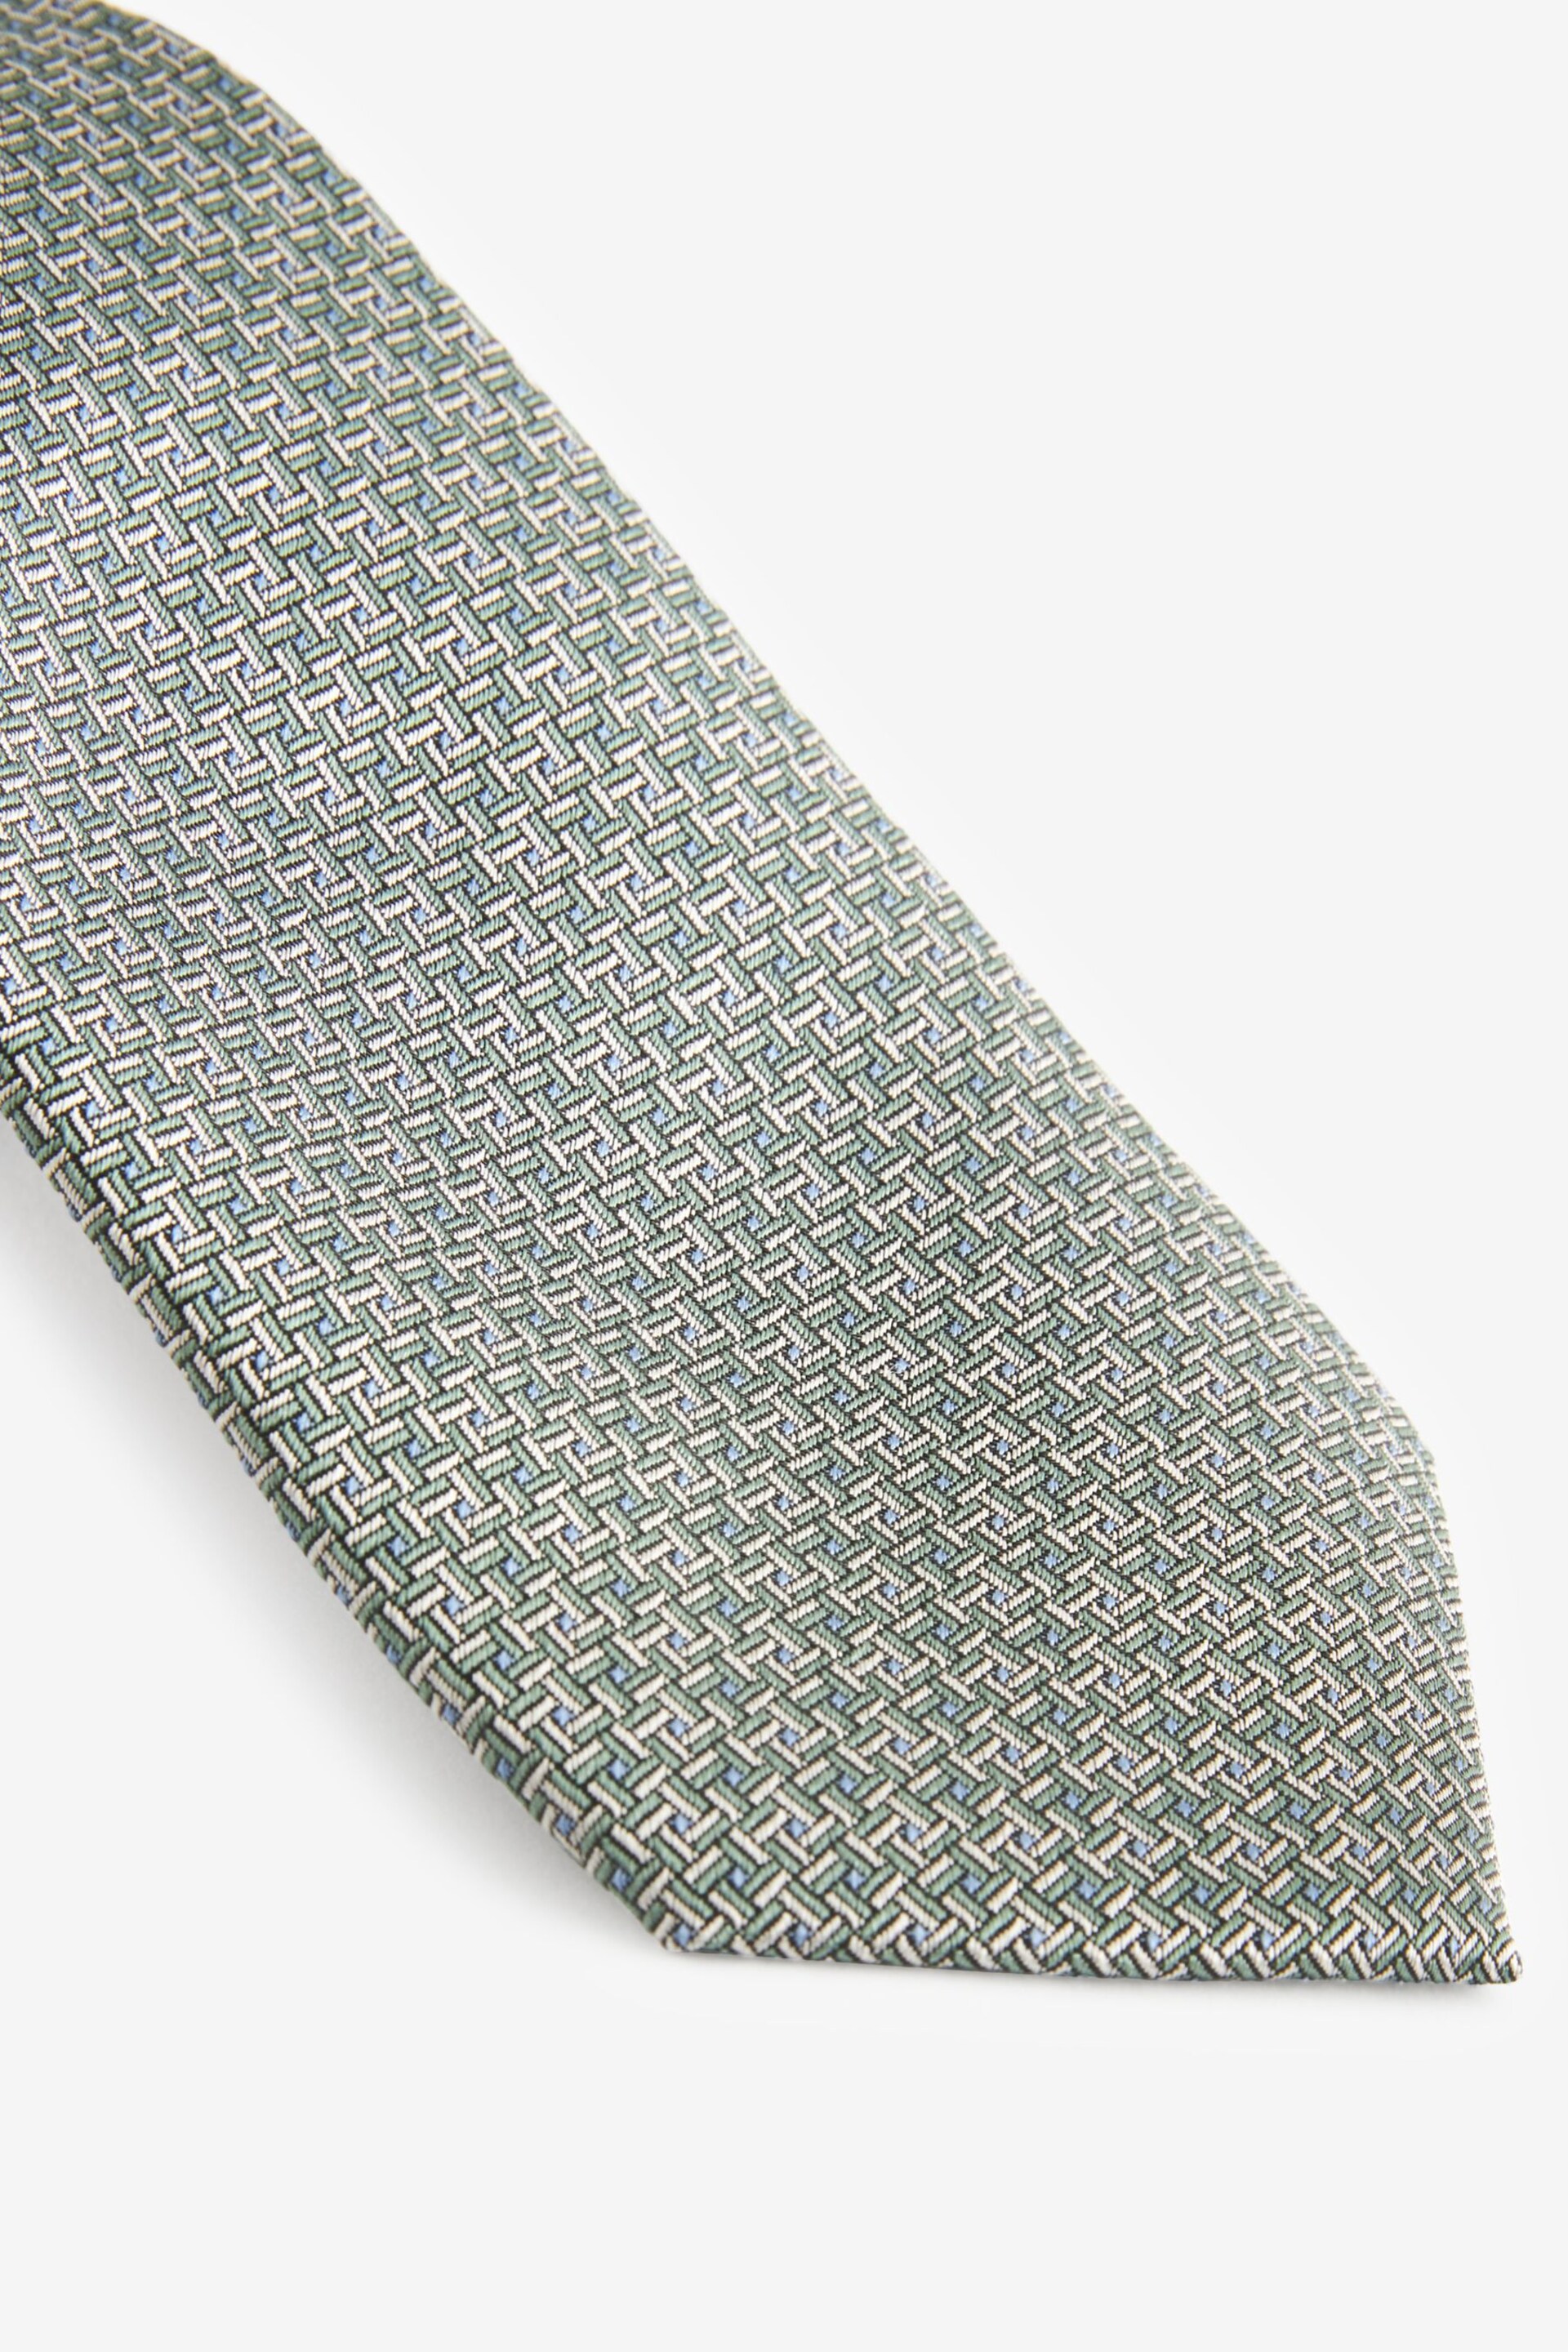 Green Textured Silk Tie - Image 2 of 3